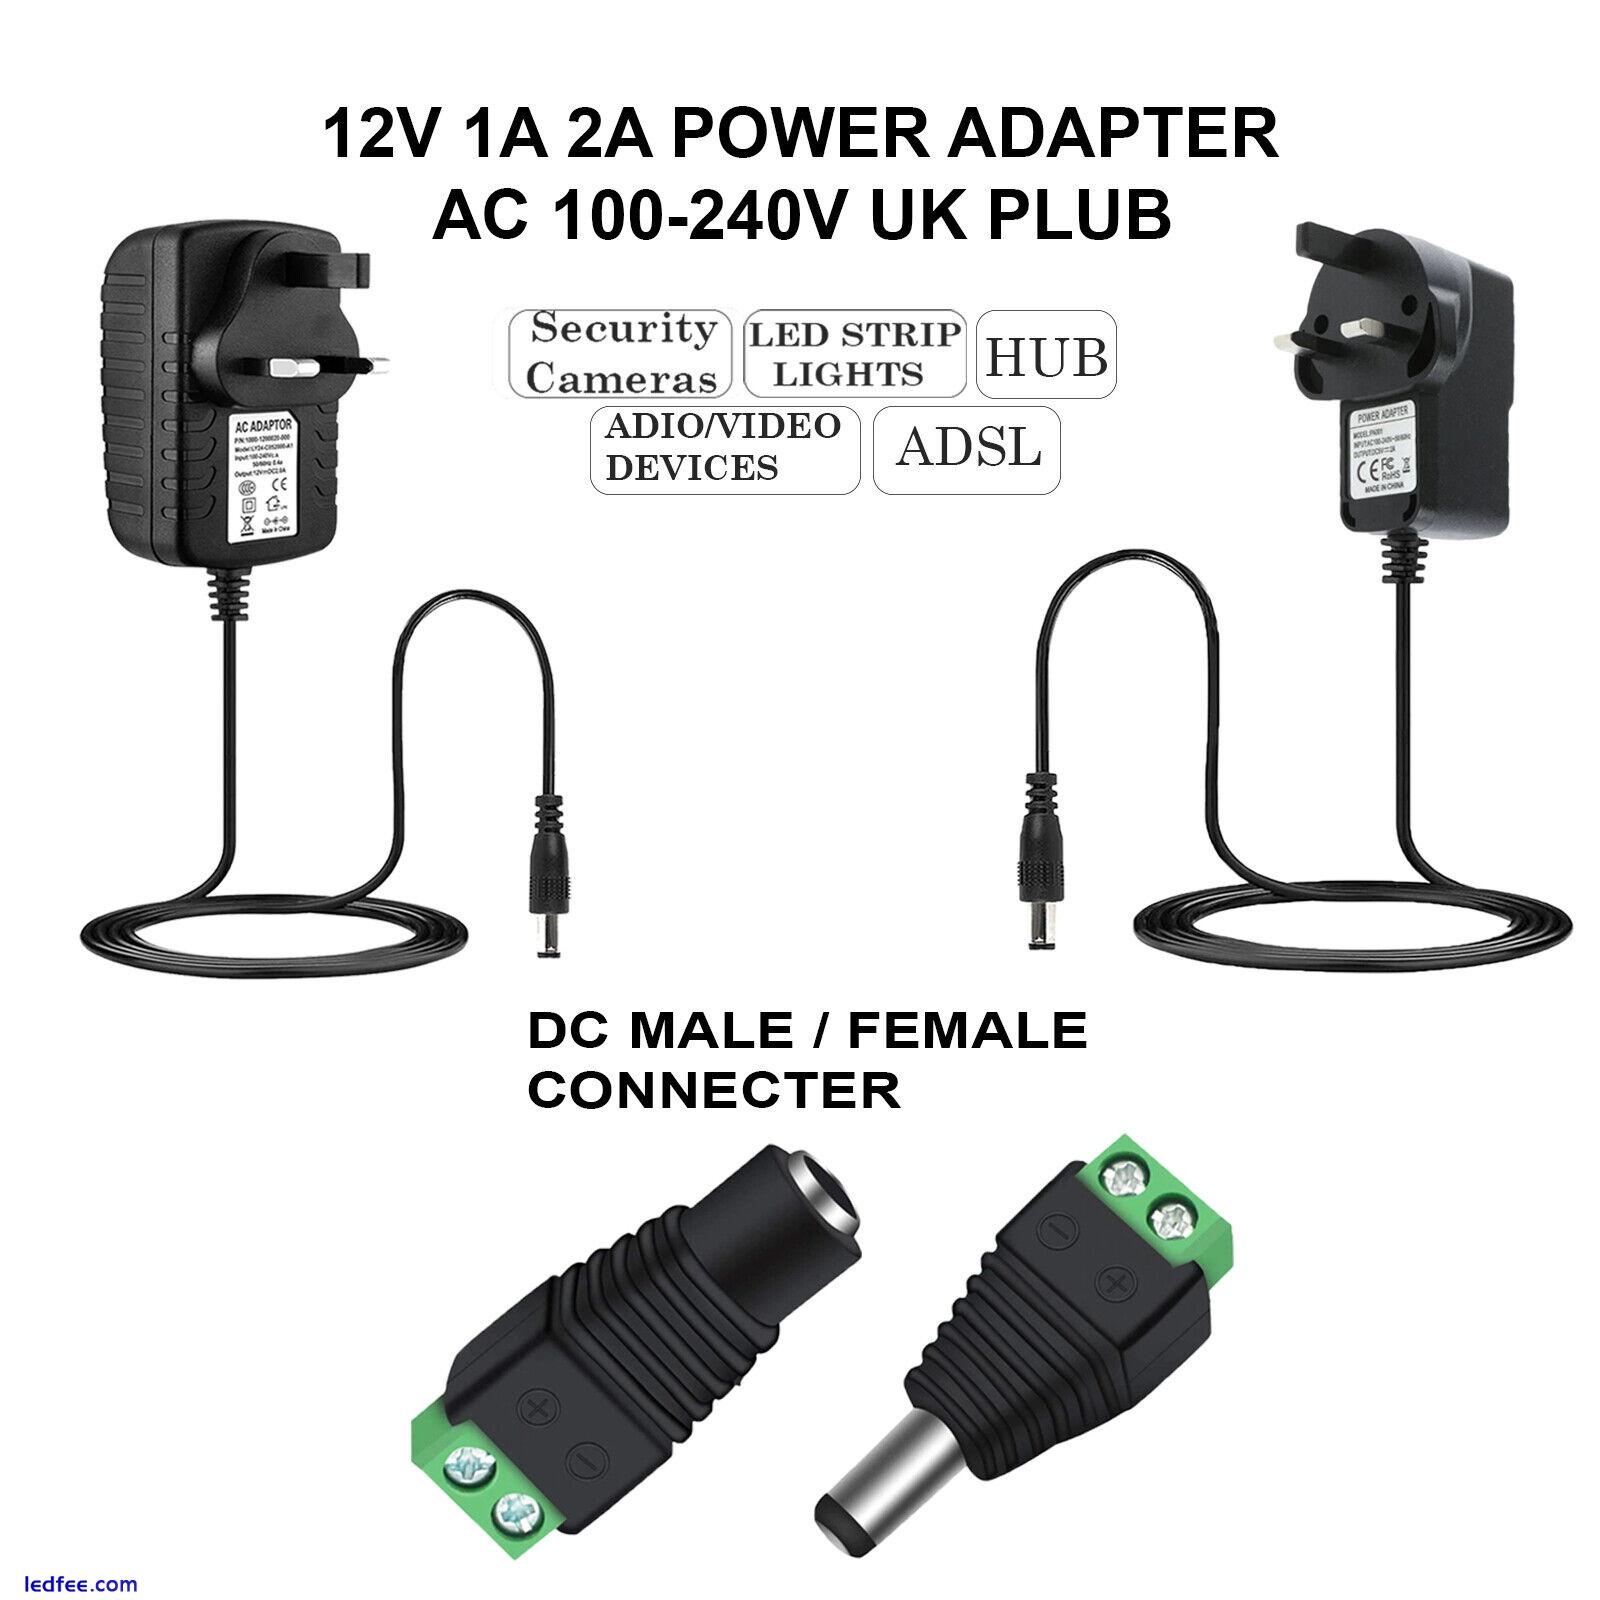 12V 1A/2A AC to DC Adapter Charger Power Supply LED Light Camera CCTV UK Plug UK 0 